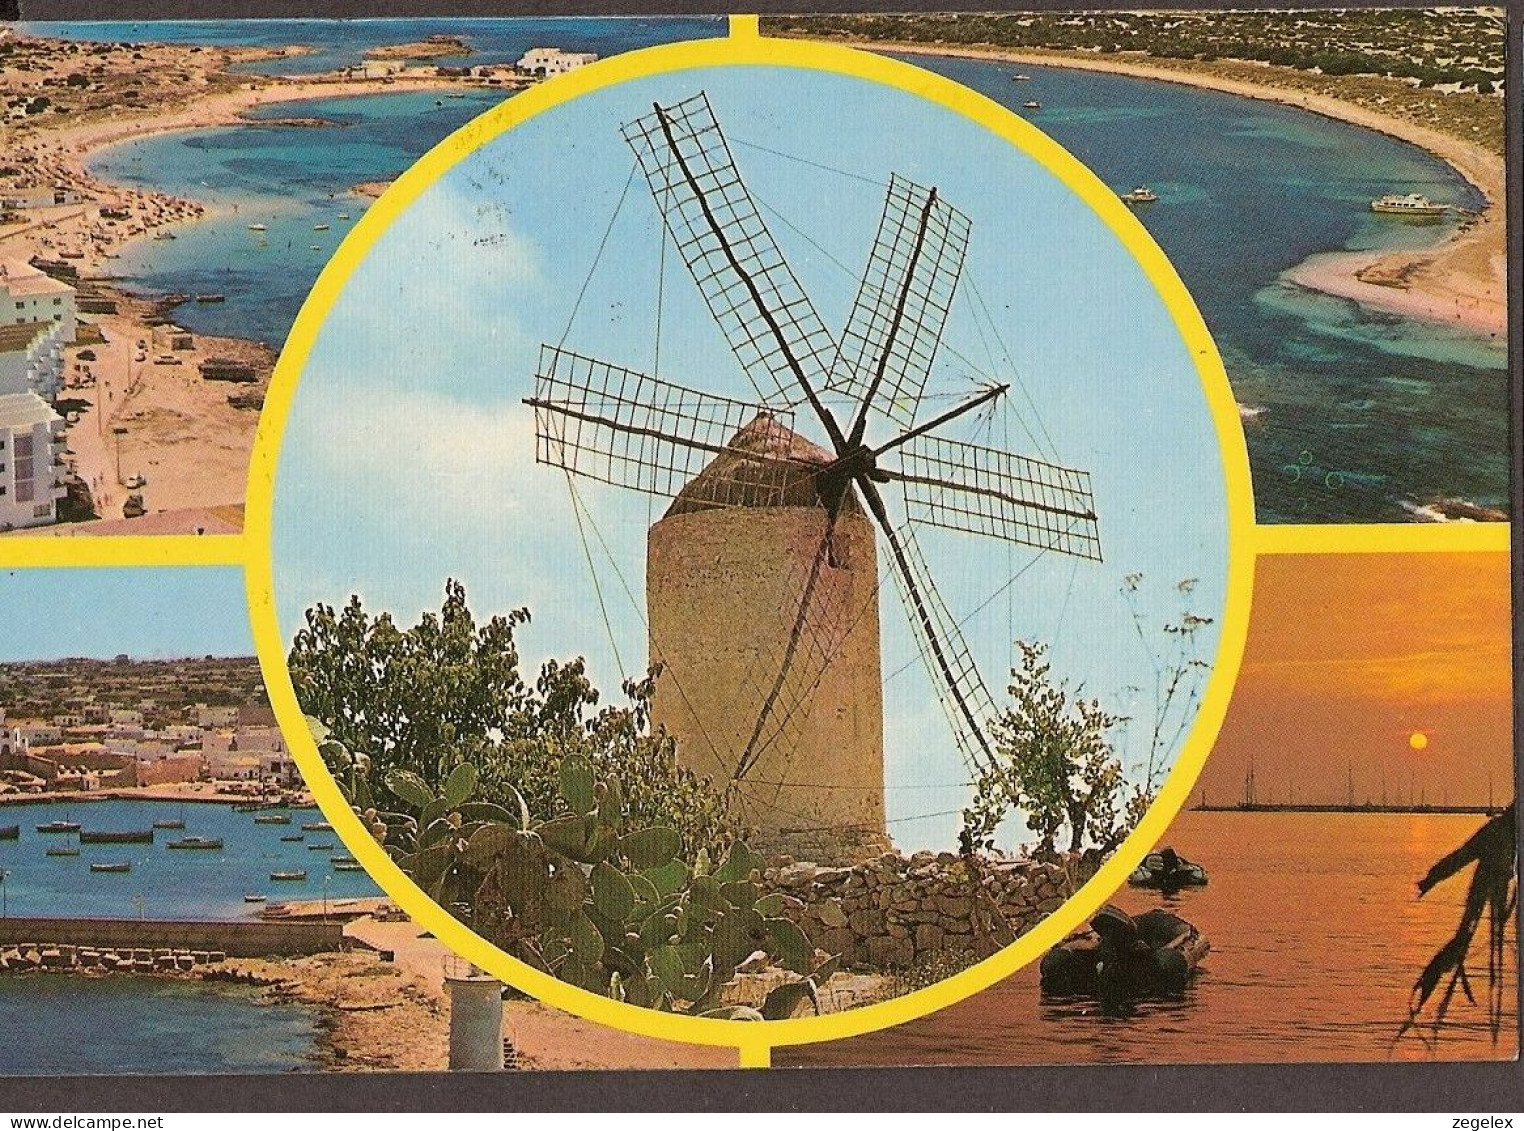 Formentera - Baleares - Moulin à Vent, Windmill, Molen, Mühle - Formentera